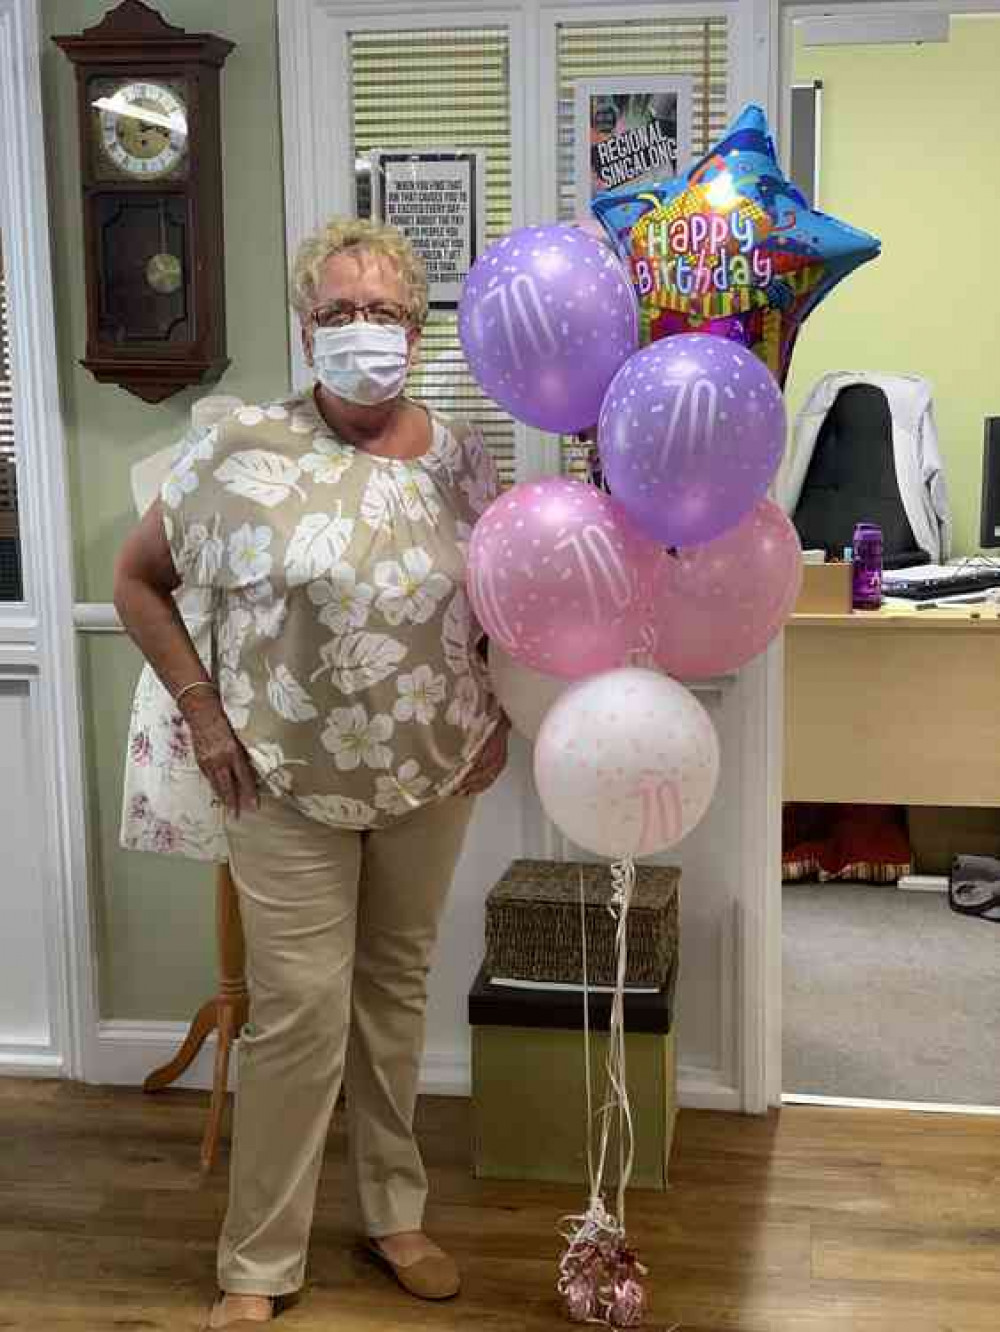 Sheila recently celebrated her 70th birthday.